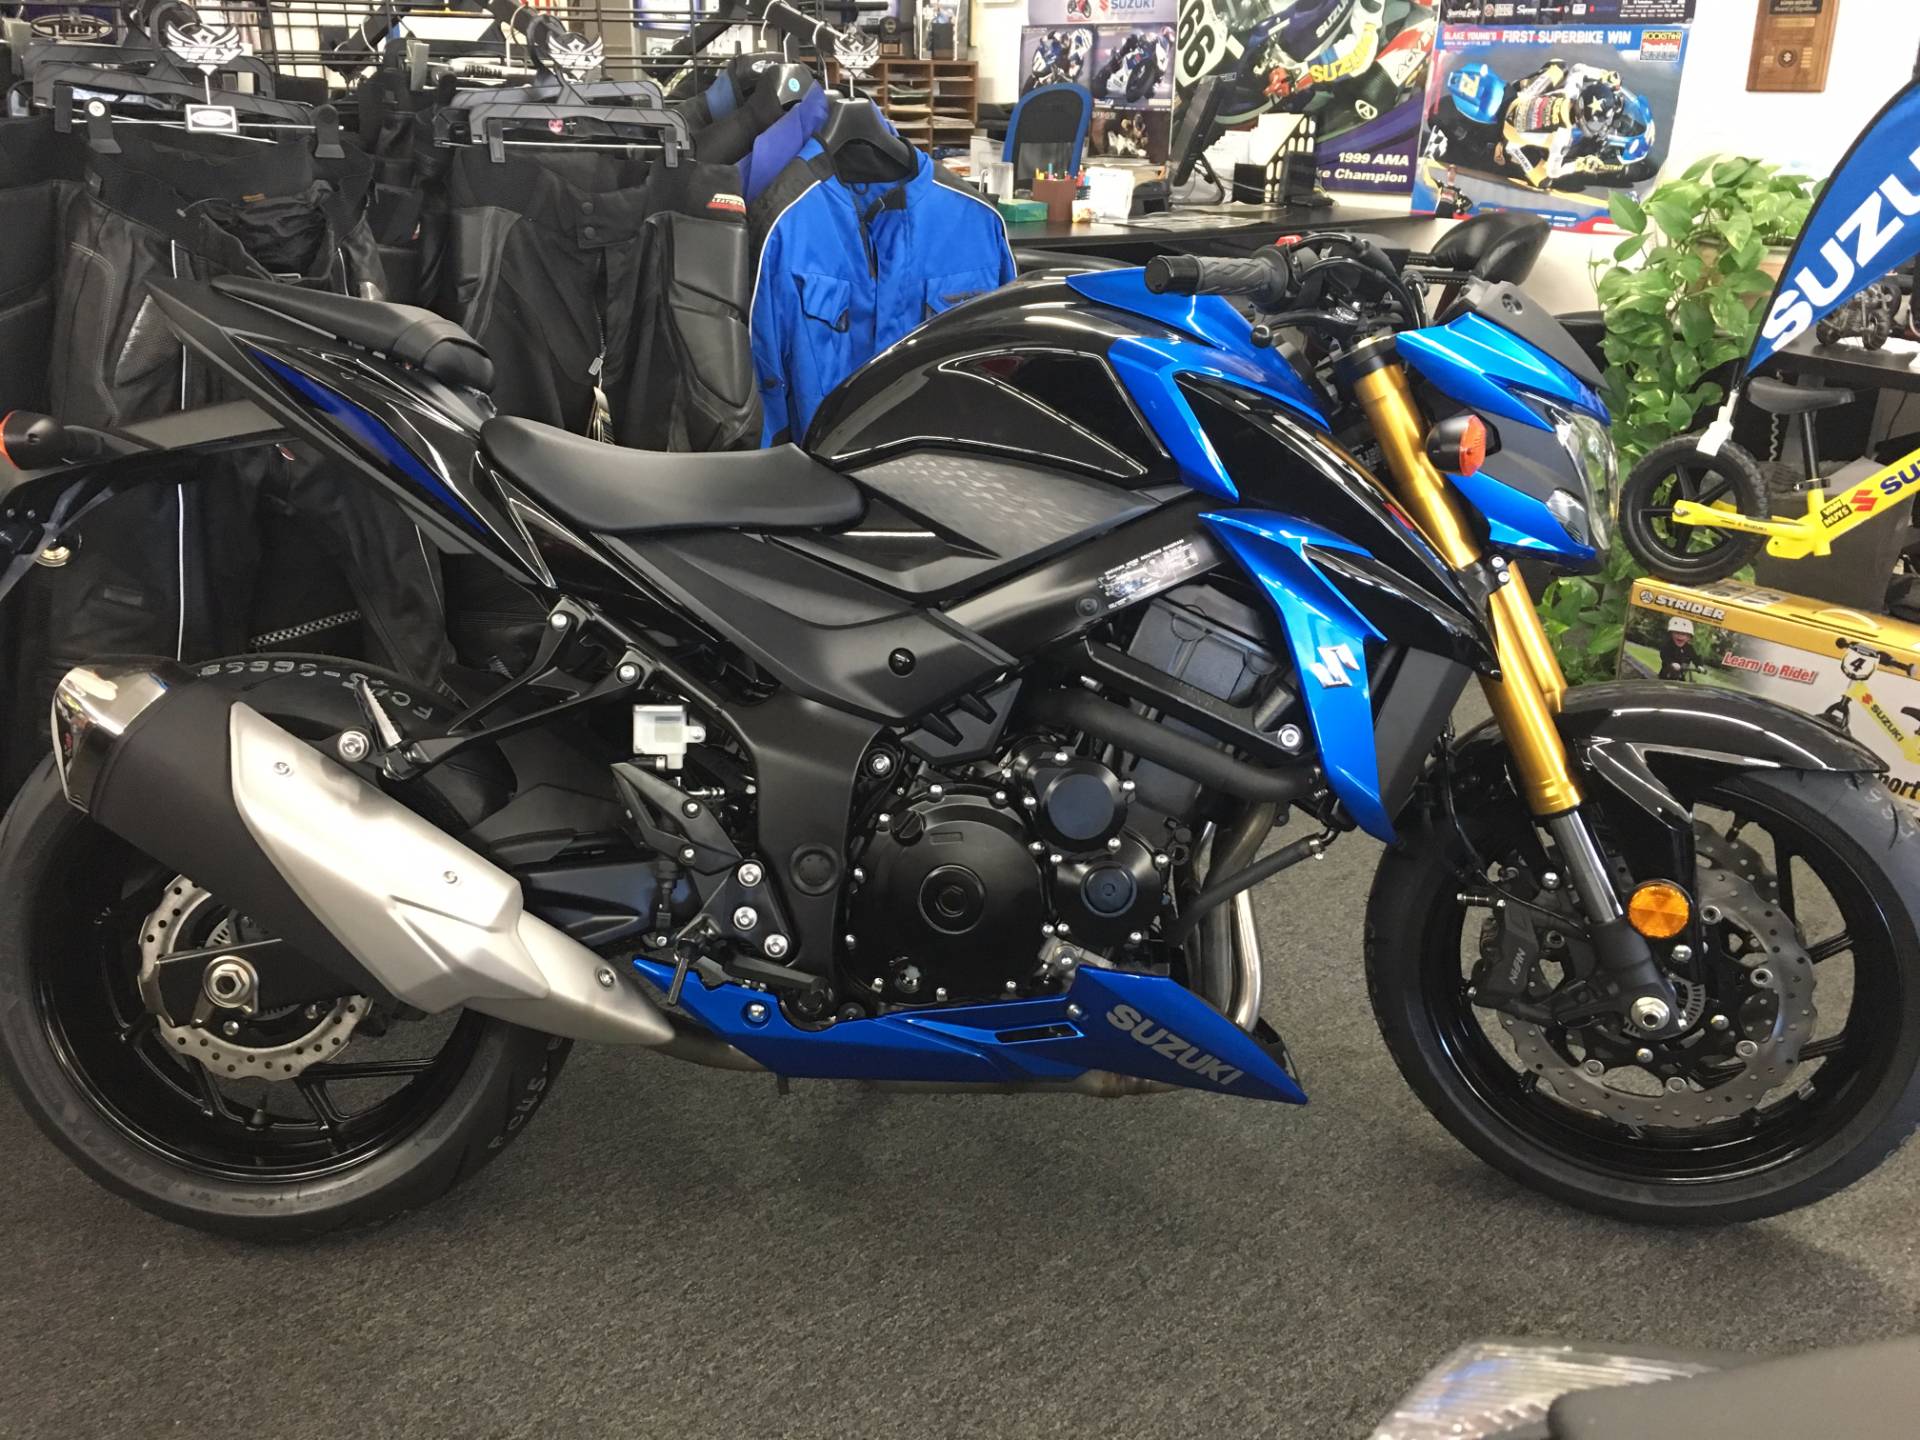 New 2018 Suzuki GSX-S750 Motorcycles in Van Nuys, CA | Stock Number: N/A